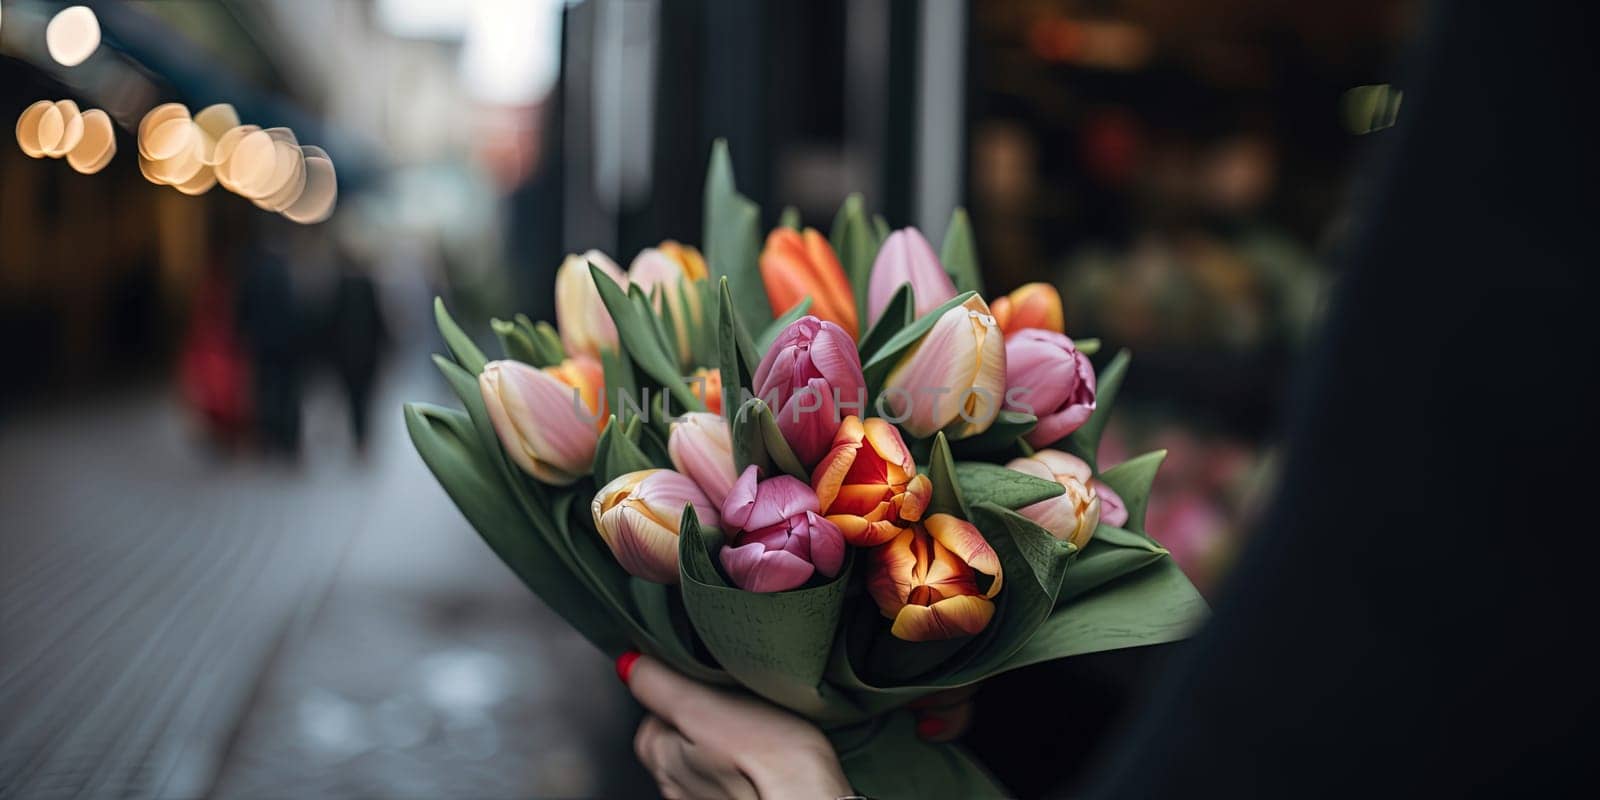 Female Buying Beautiful Bouquet Of Fresh Tulips In Flower Shop by tan4ikk1